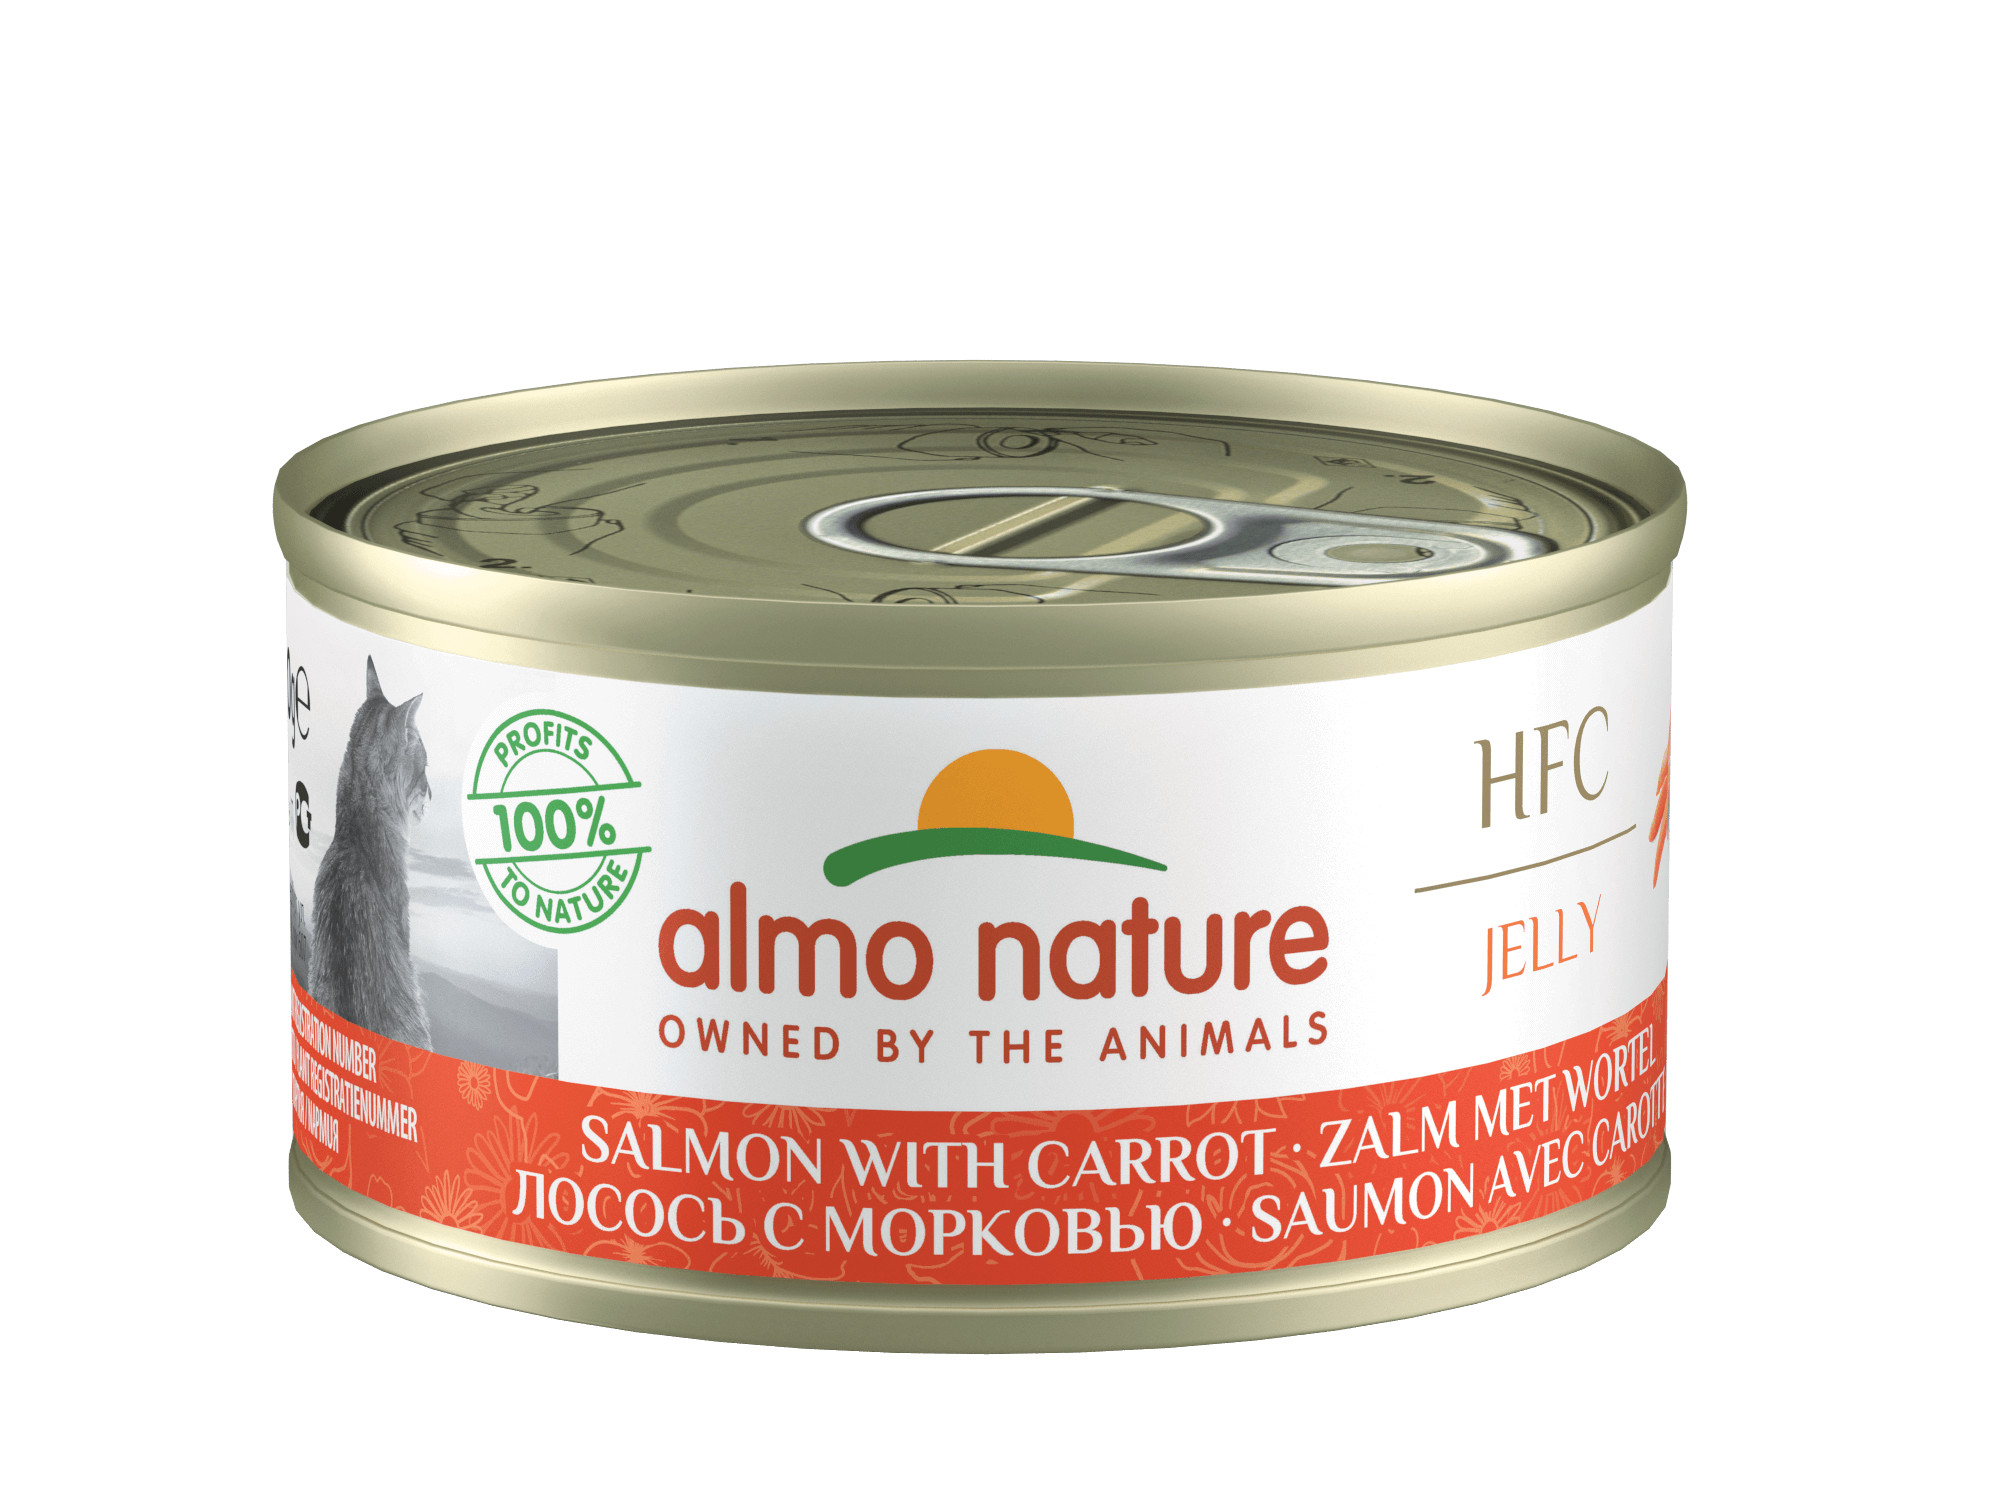 Almo Nature HFC Jelly zalm met wortel (70 gram)